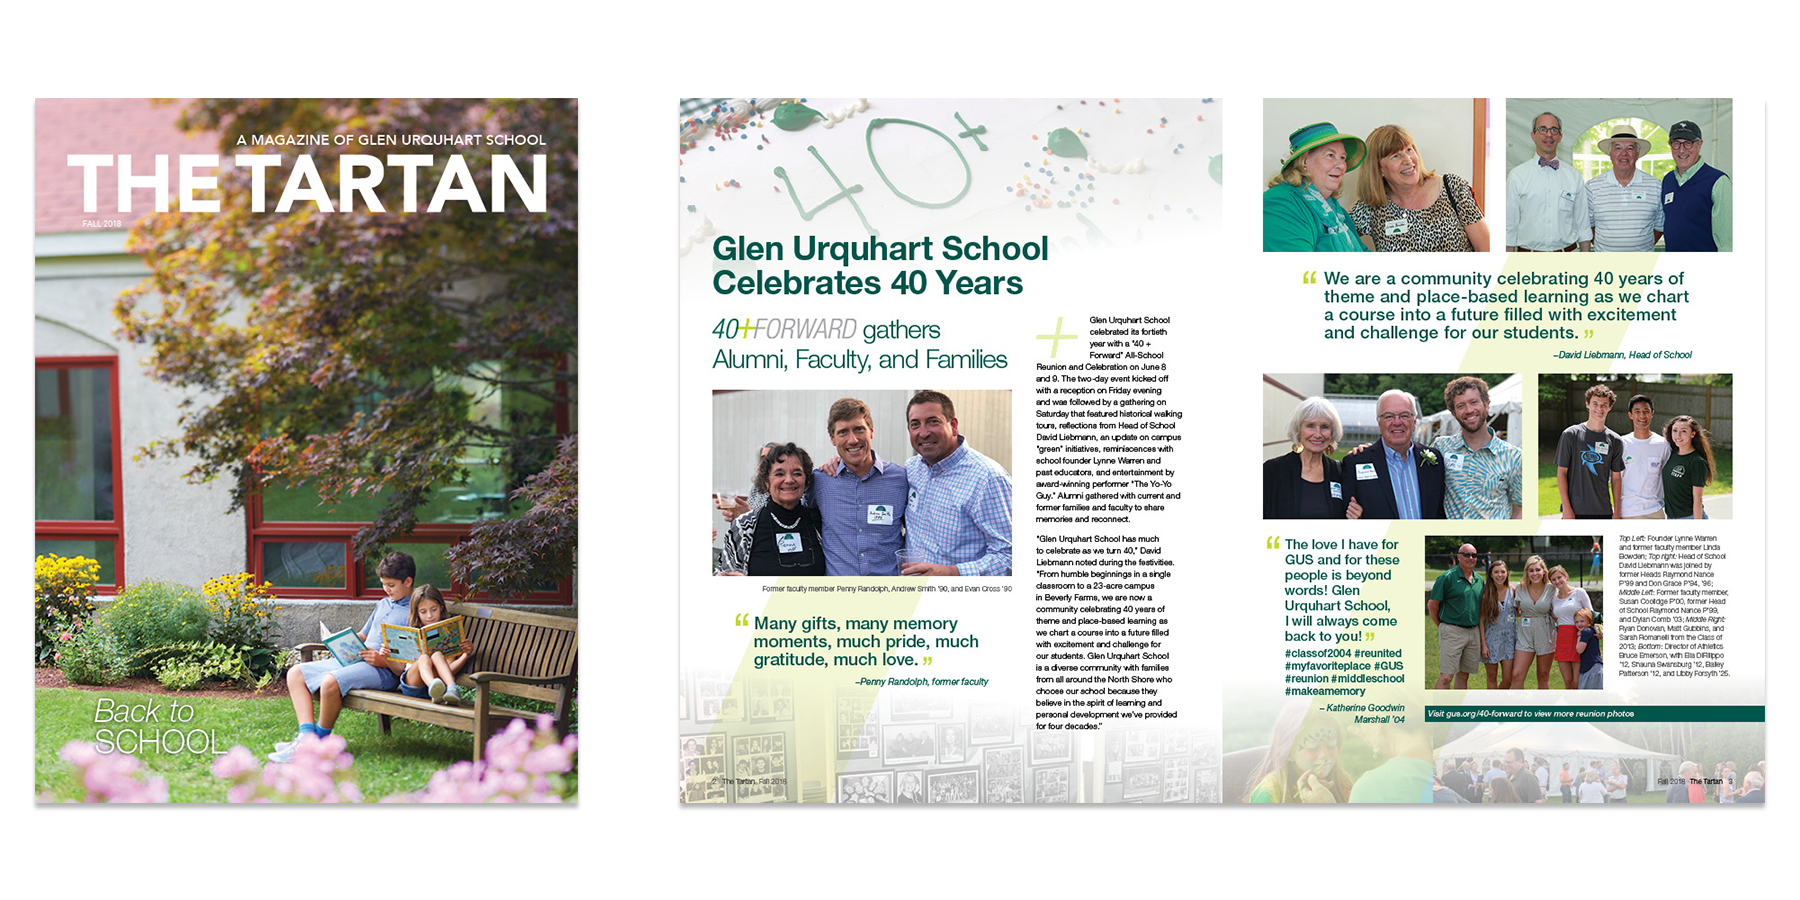 Glen Urquhart School "The Tartan" Magazine